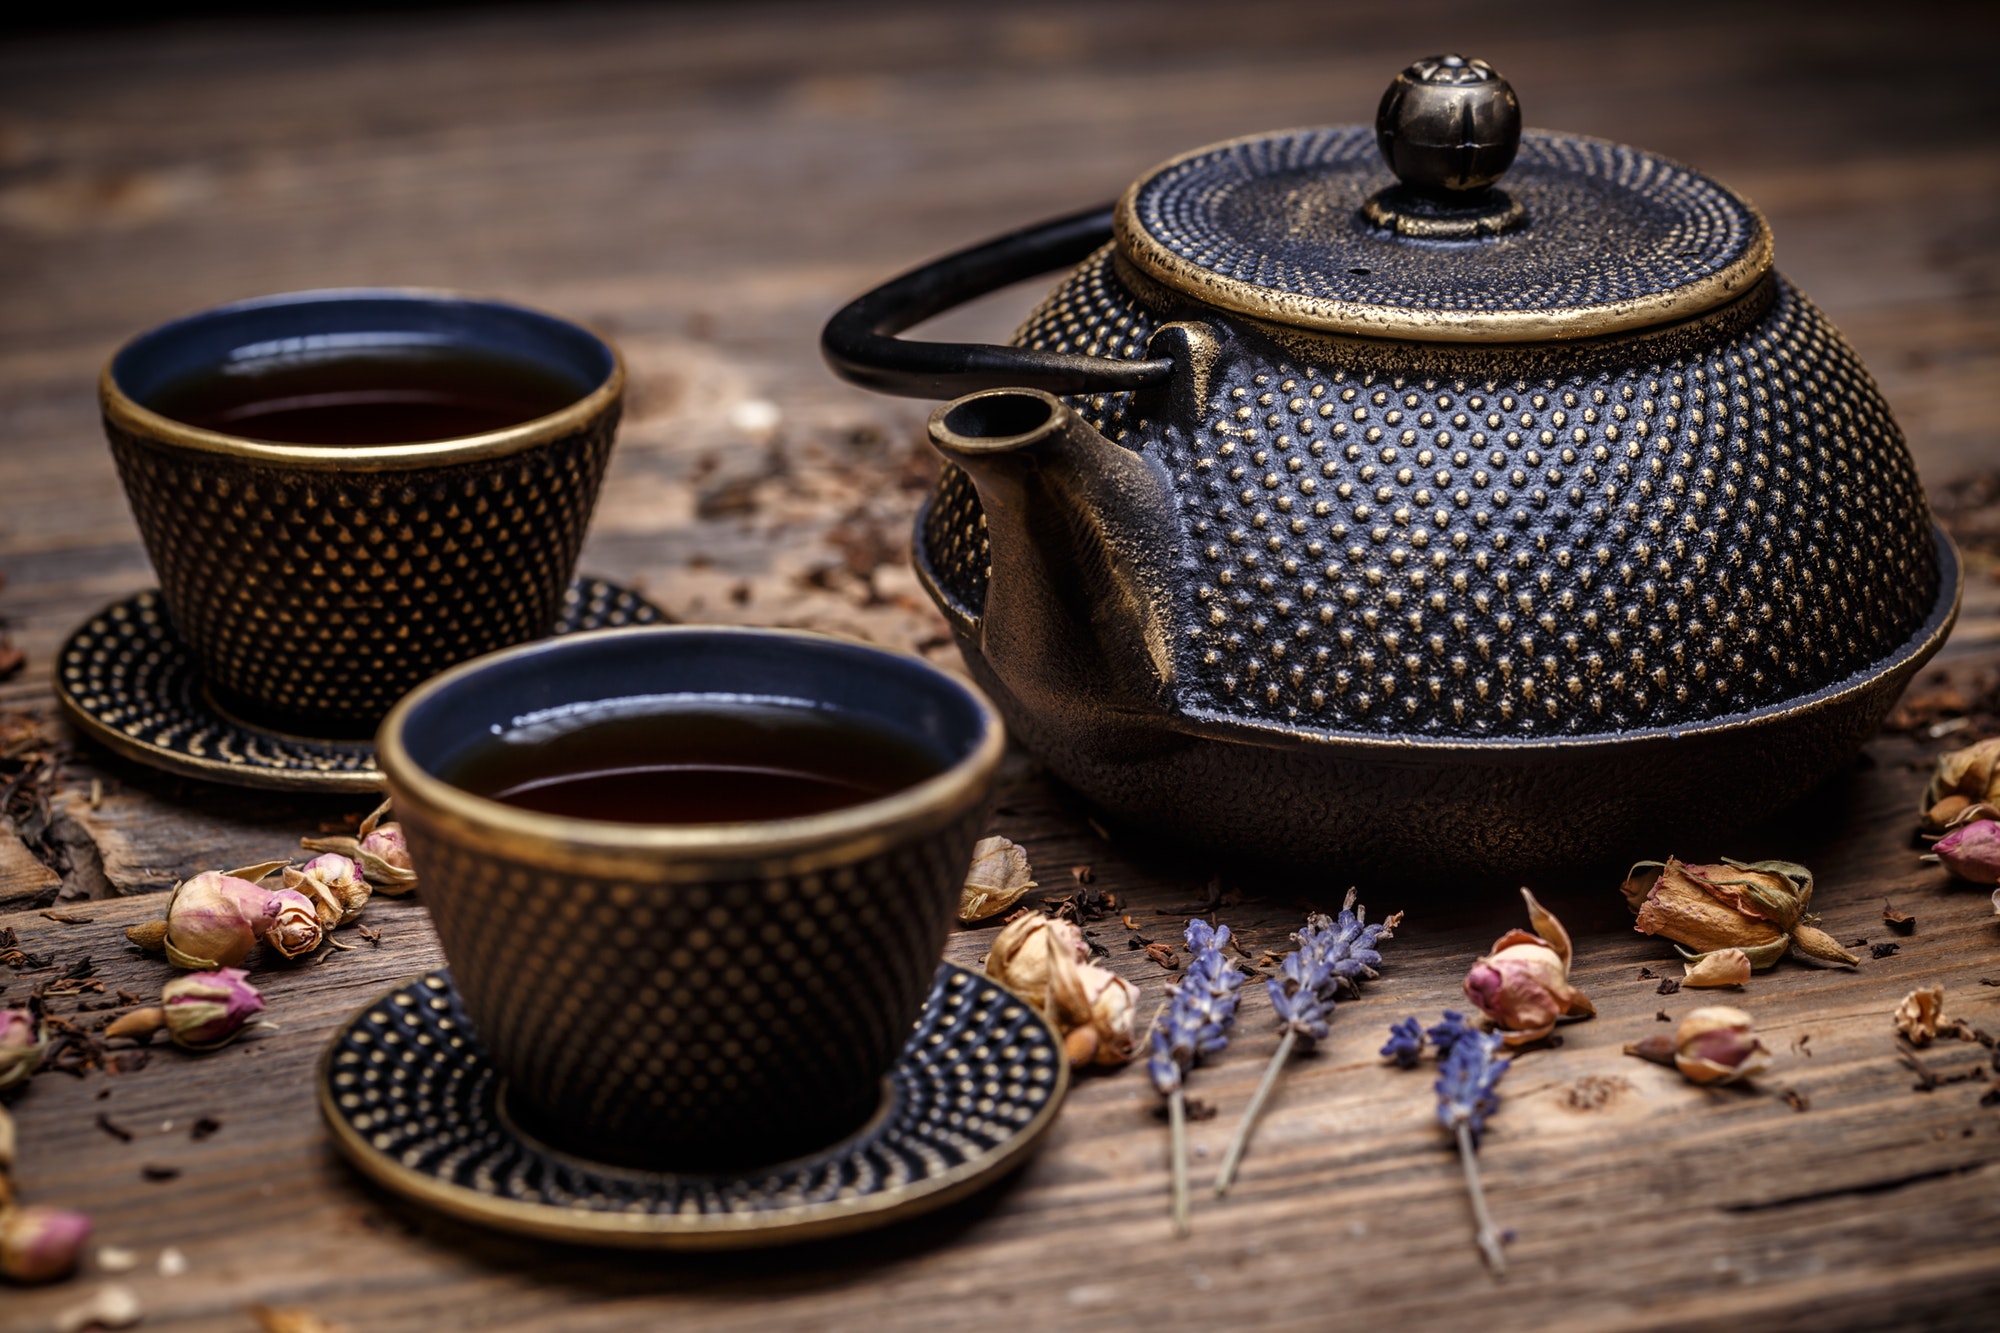 Black cast iron teapot